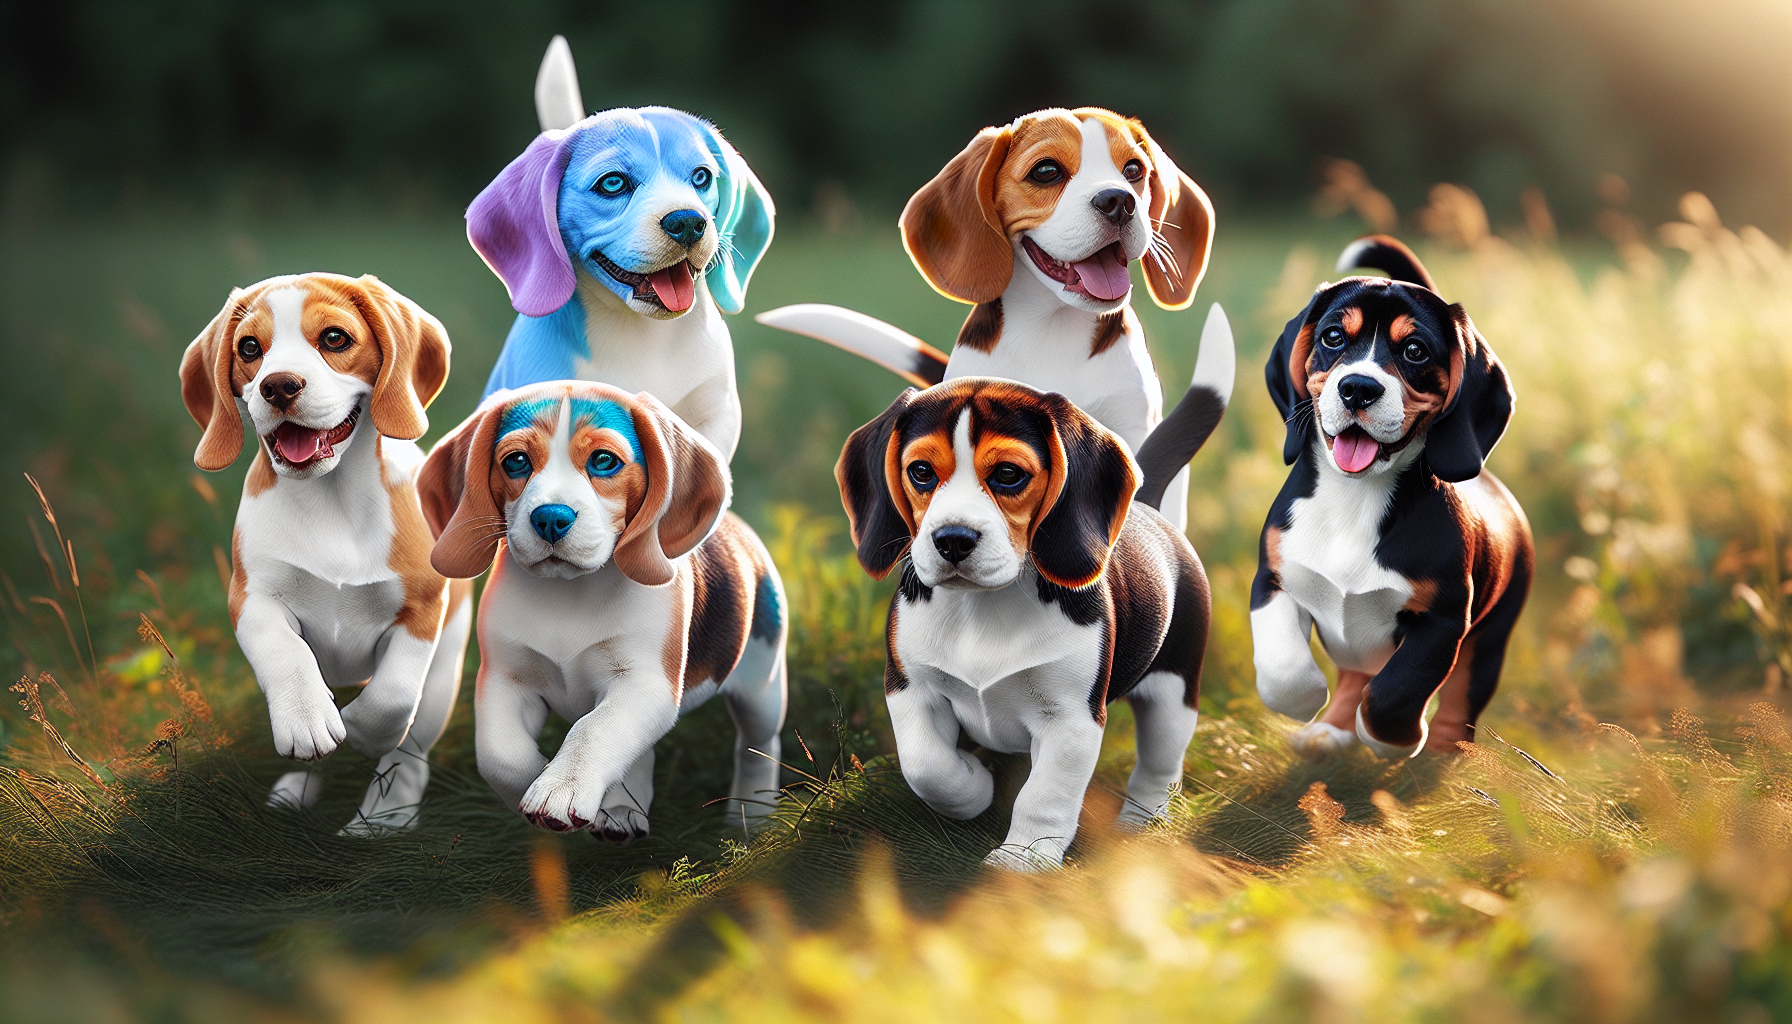 rarest colors for beagles